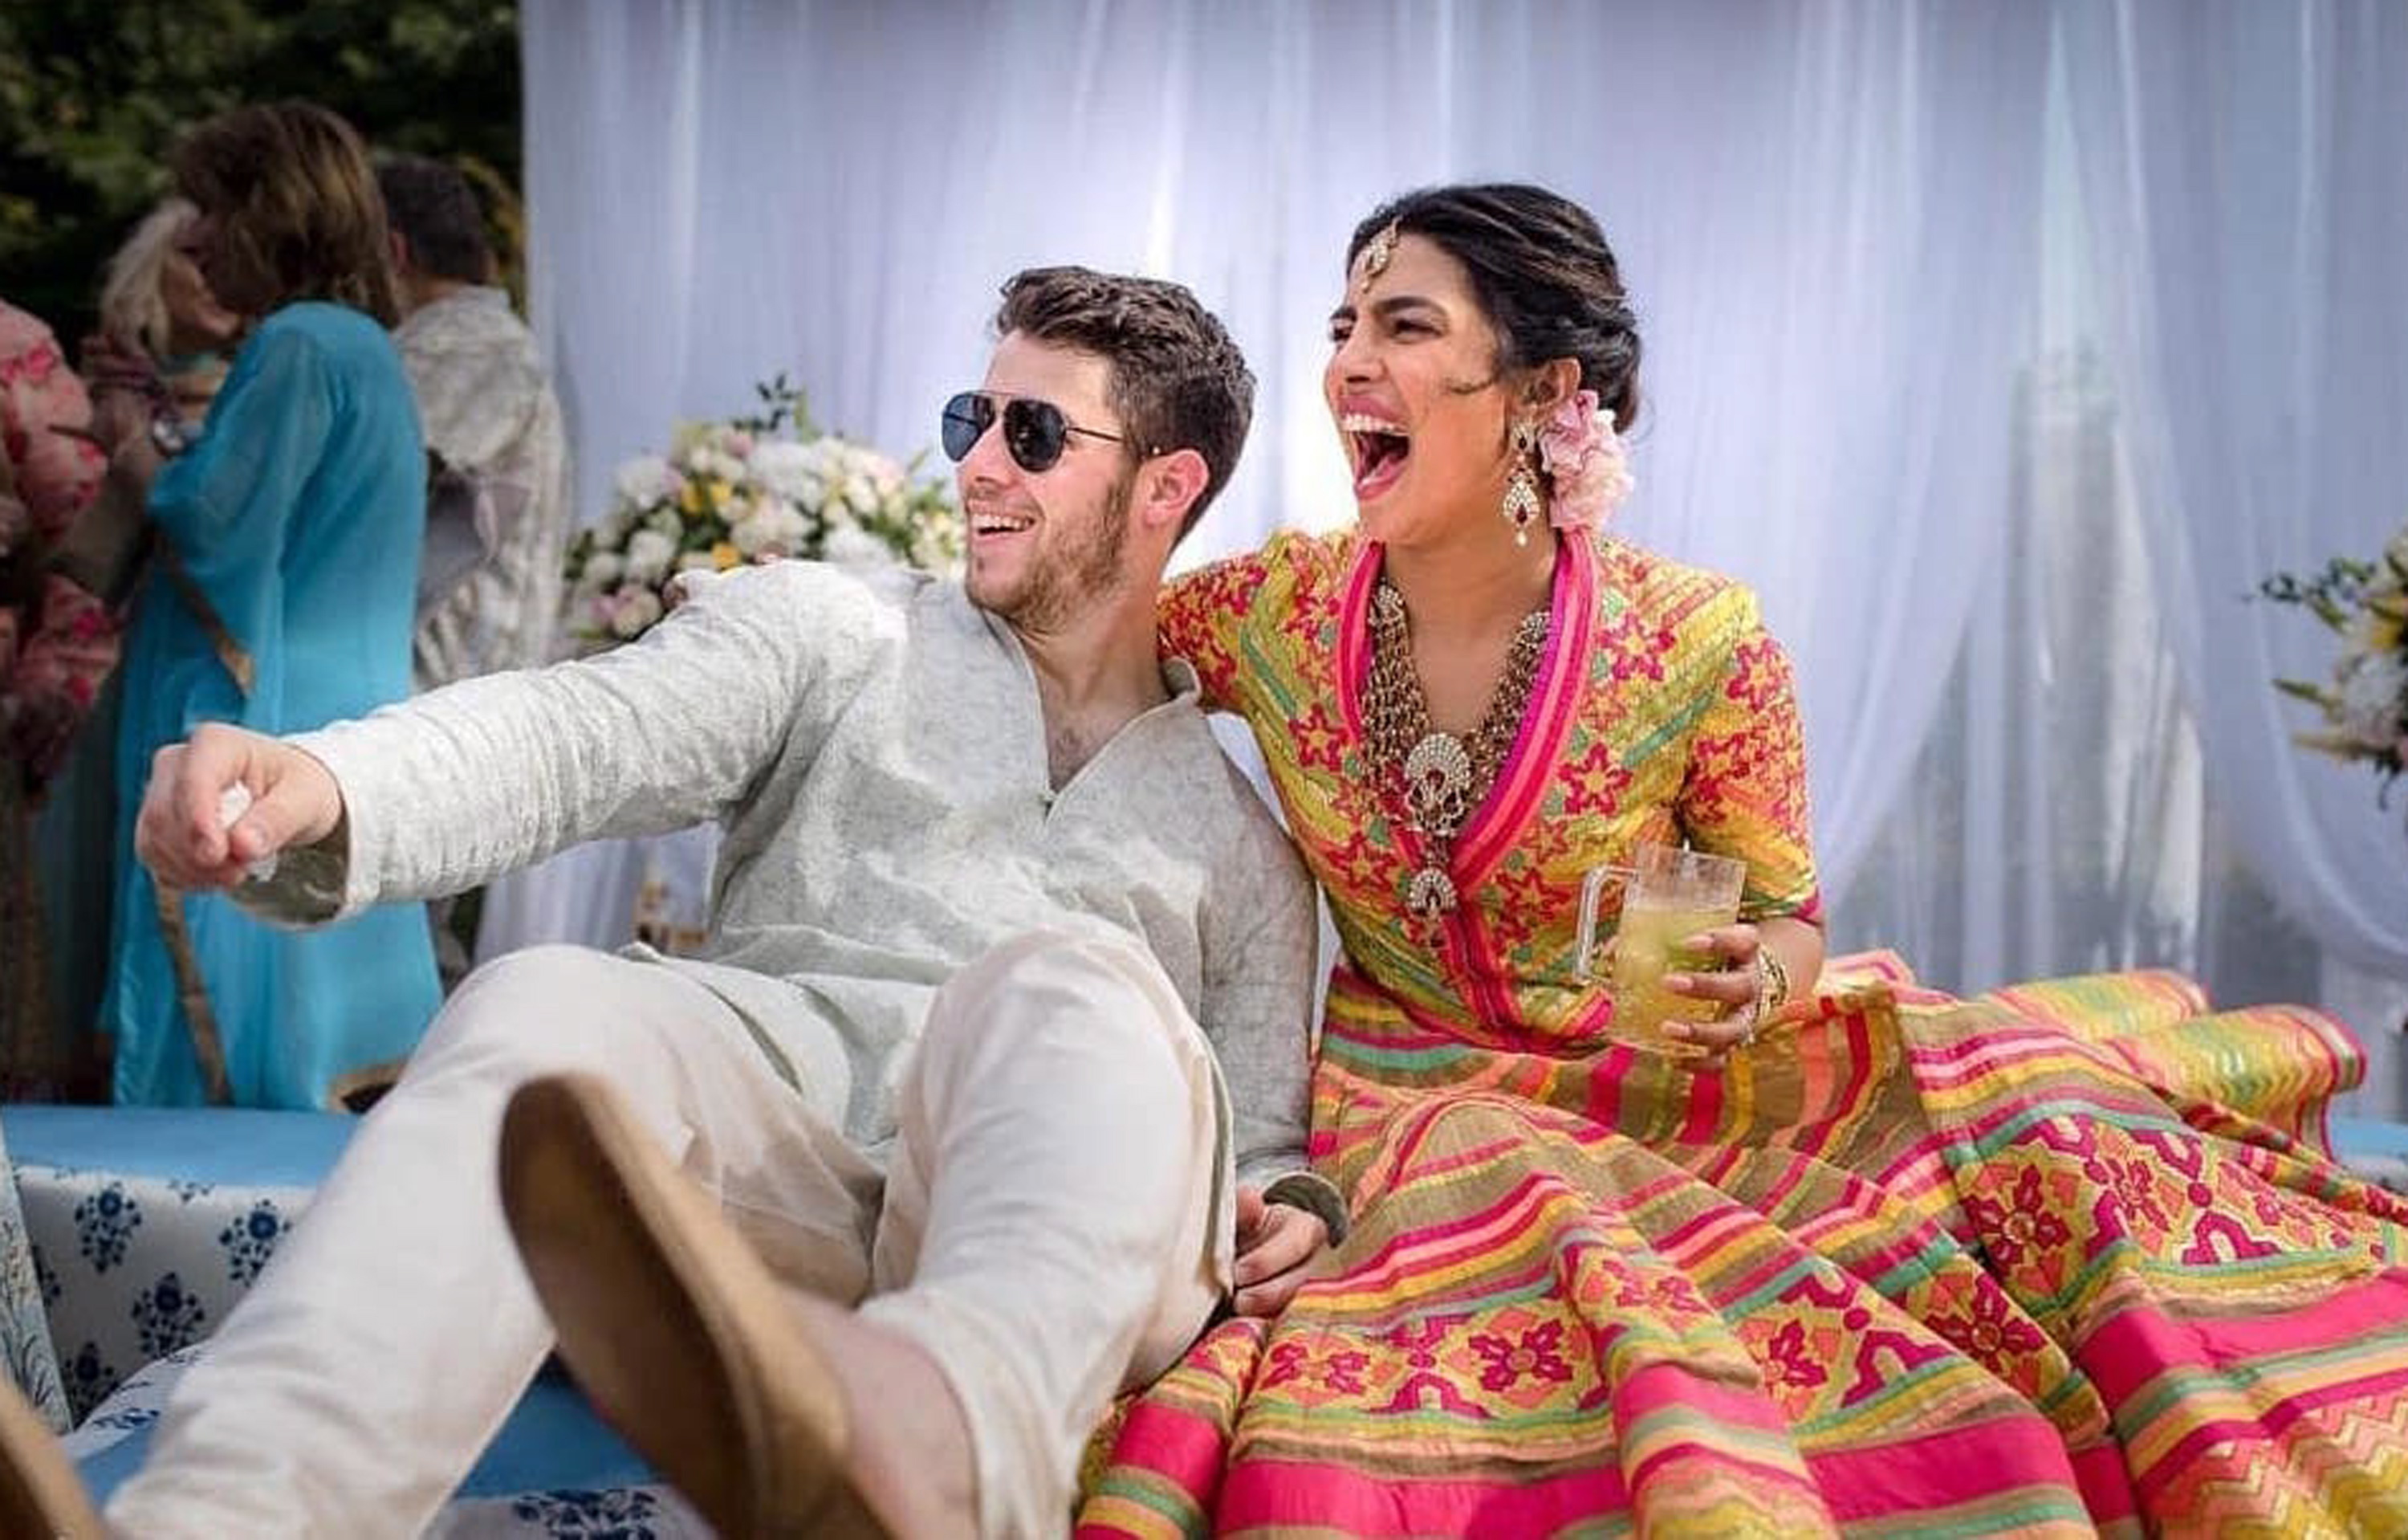 Priyanka Chopra, Nick Jonas get married, fireworks light up Jodhpur sky